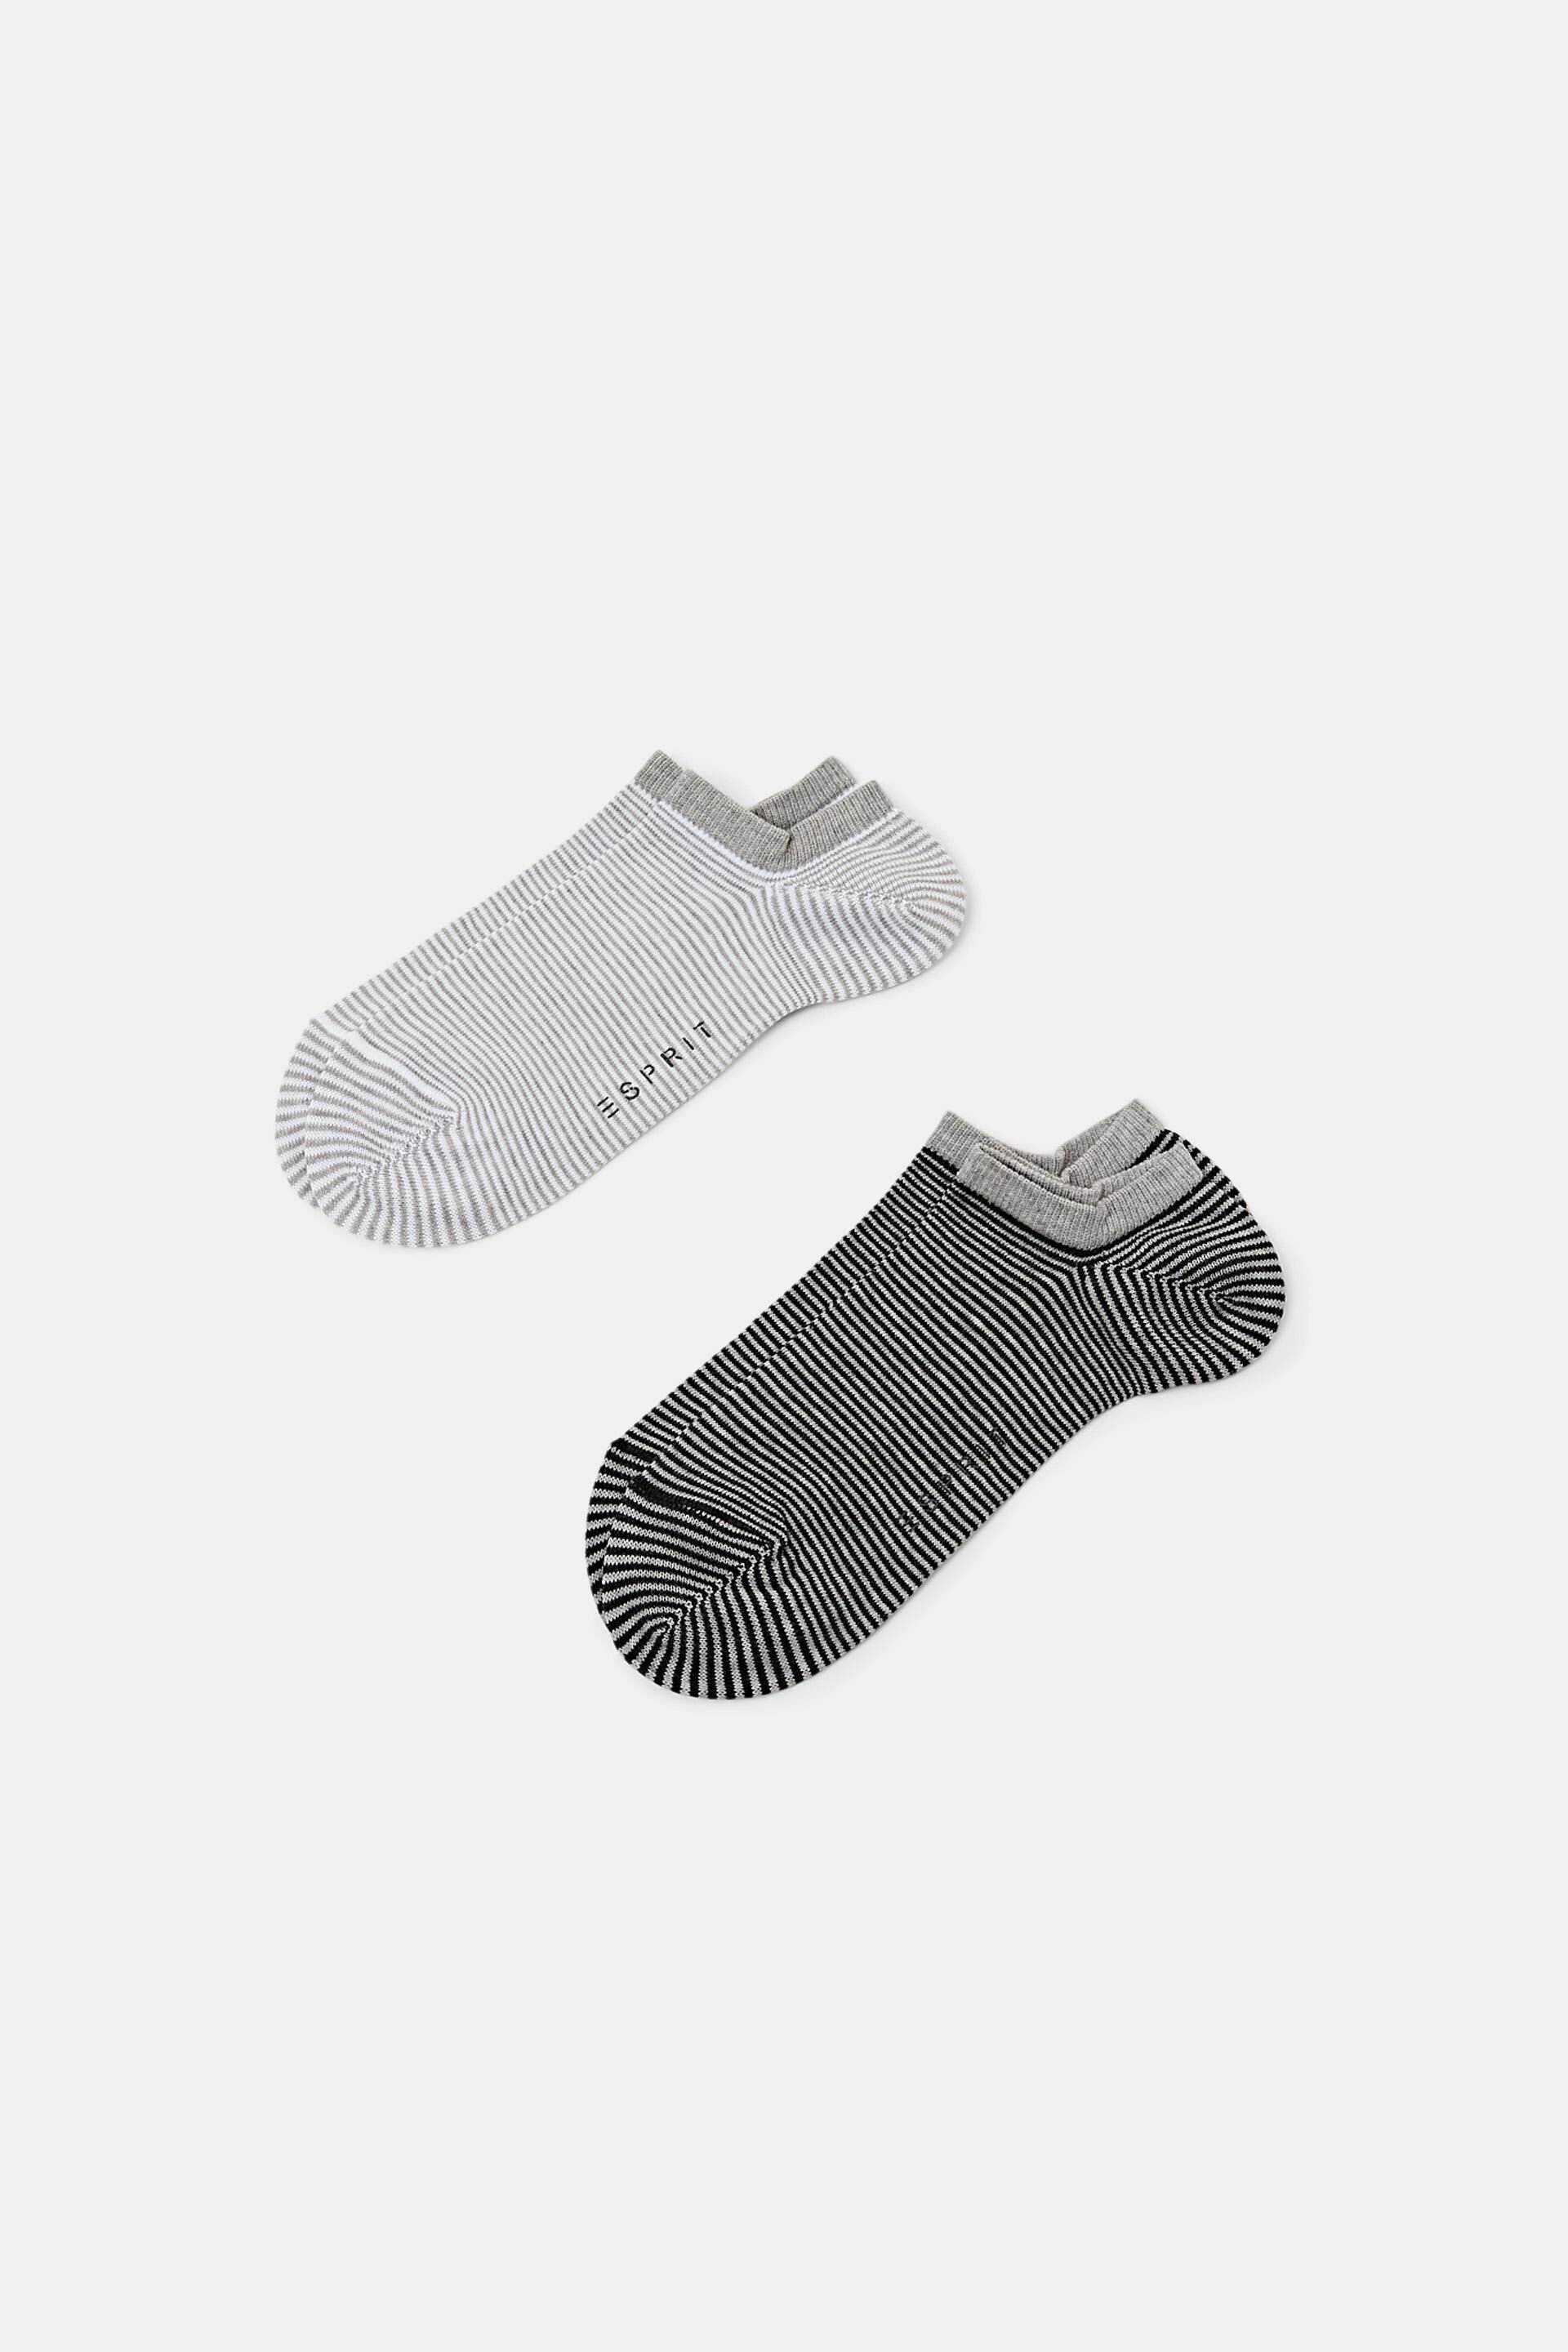 Esprit 2-pack cotton socks, sneaker organic